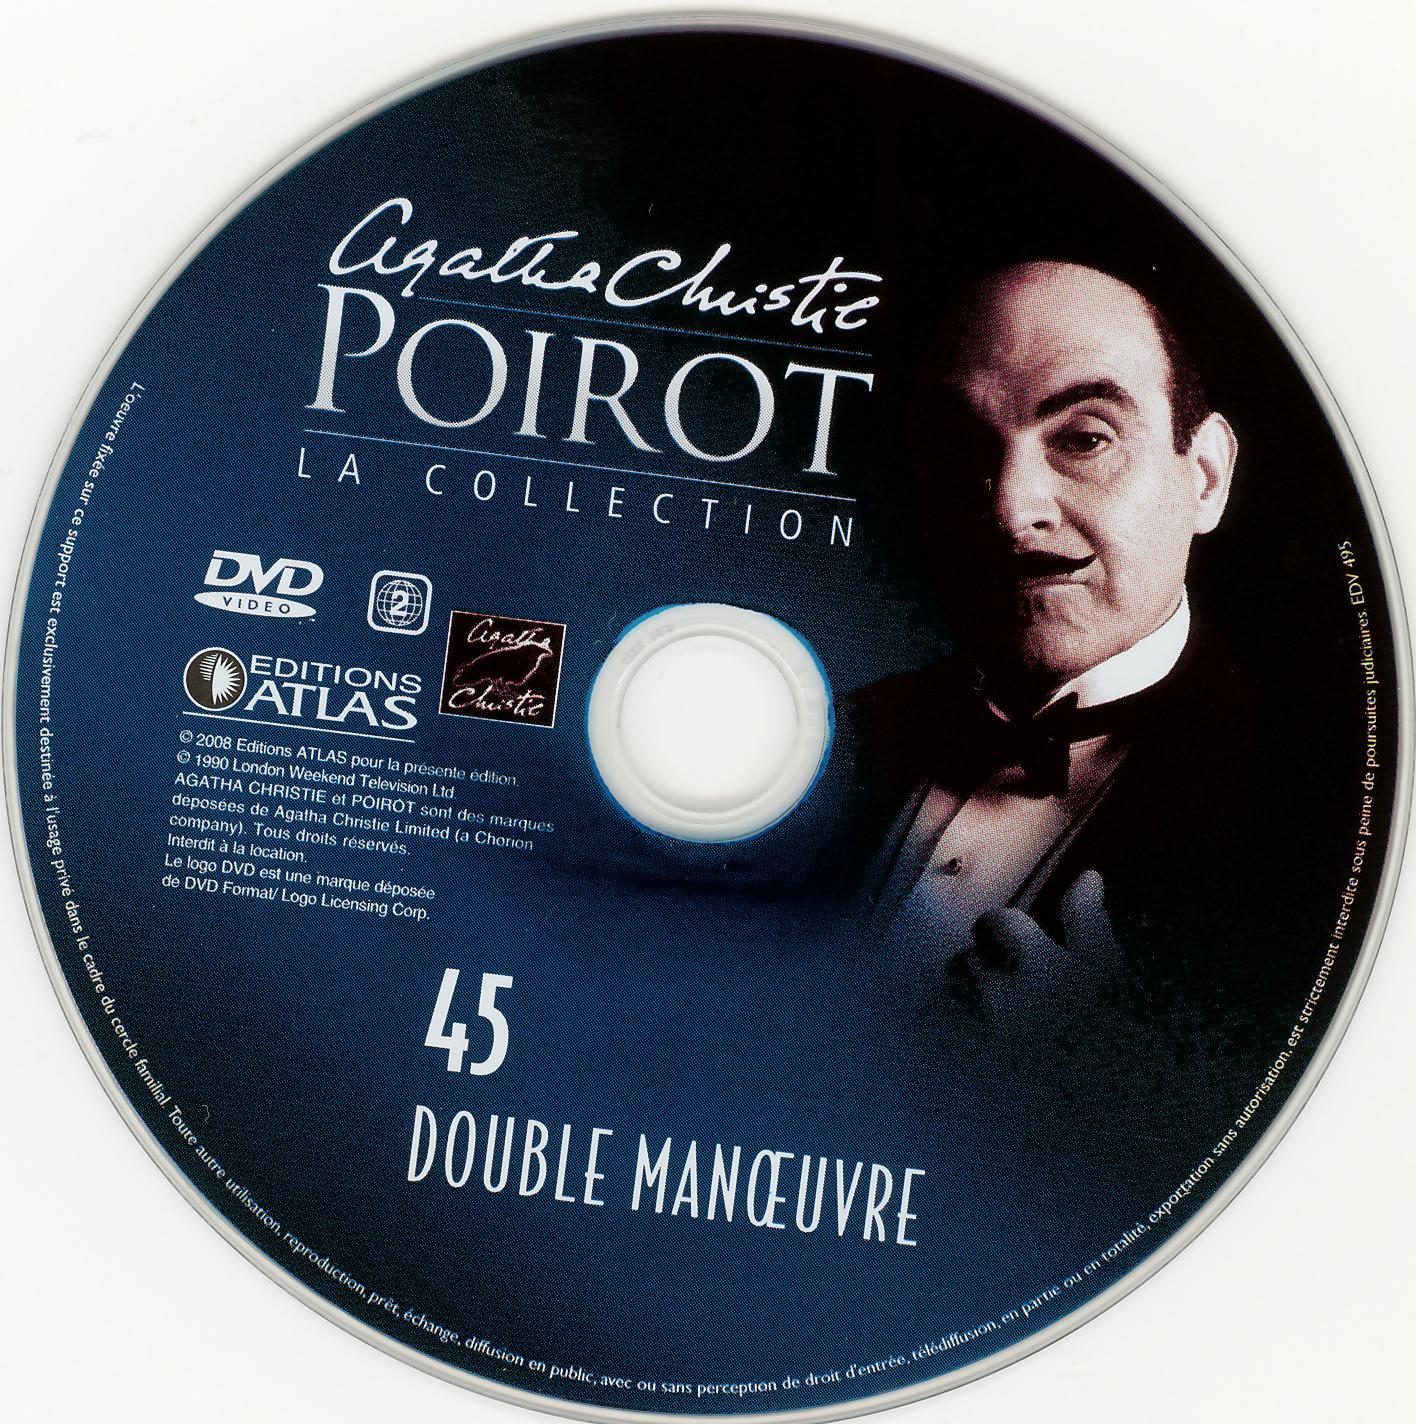 Hercule Poirot vol 45